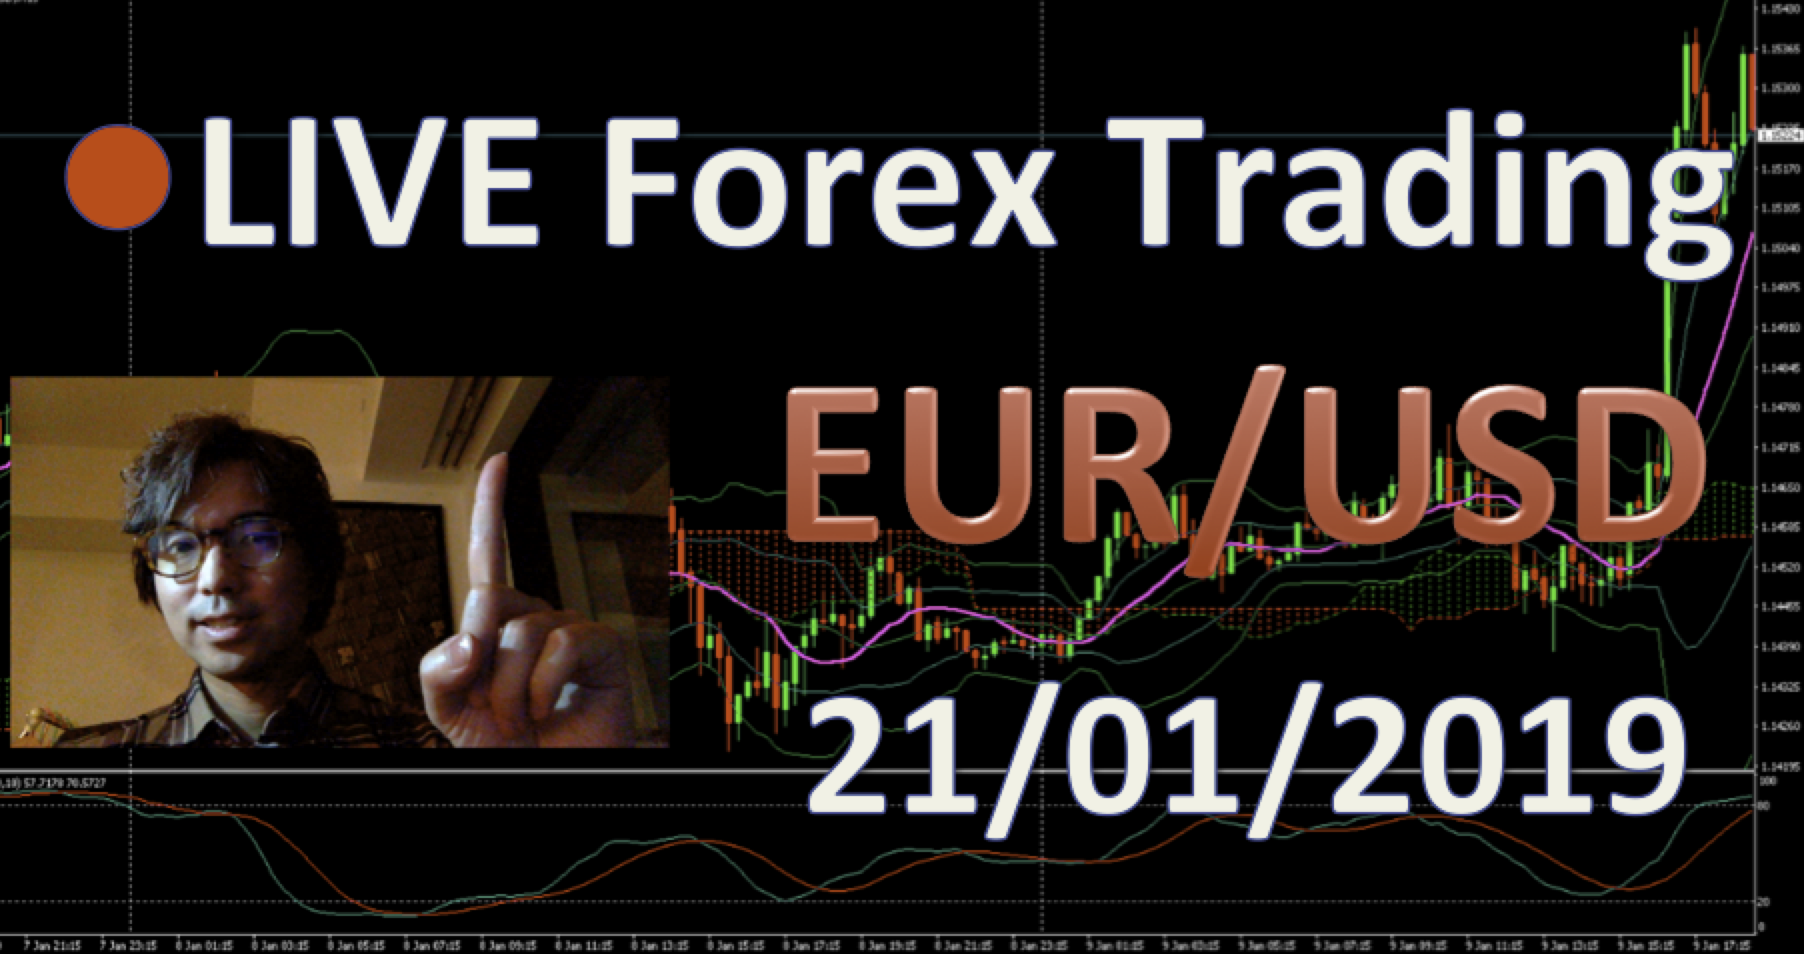 LIVE forex trading 21/01/2019 EURUSD